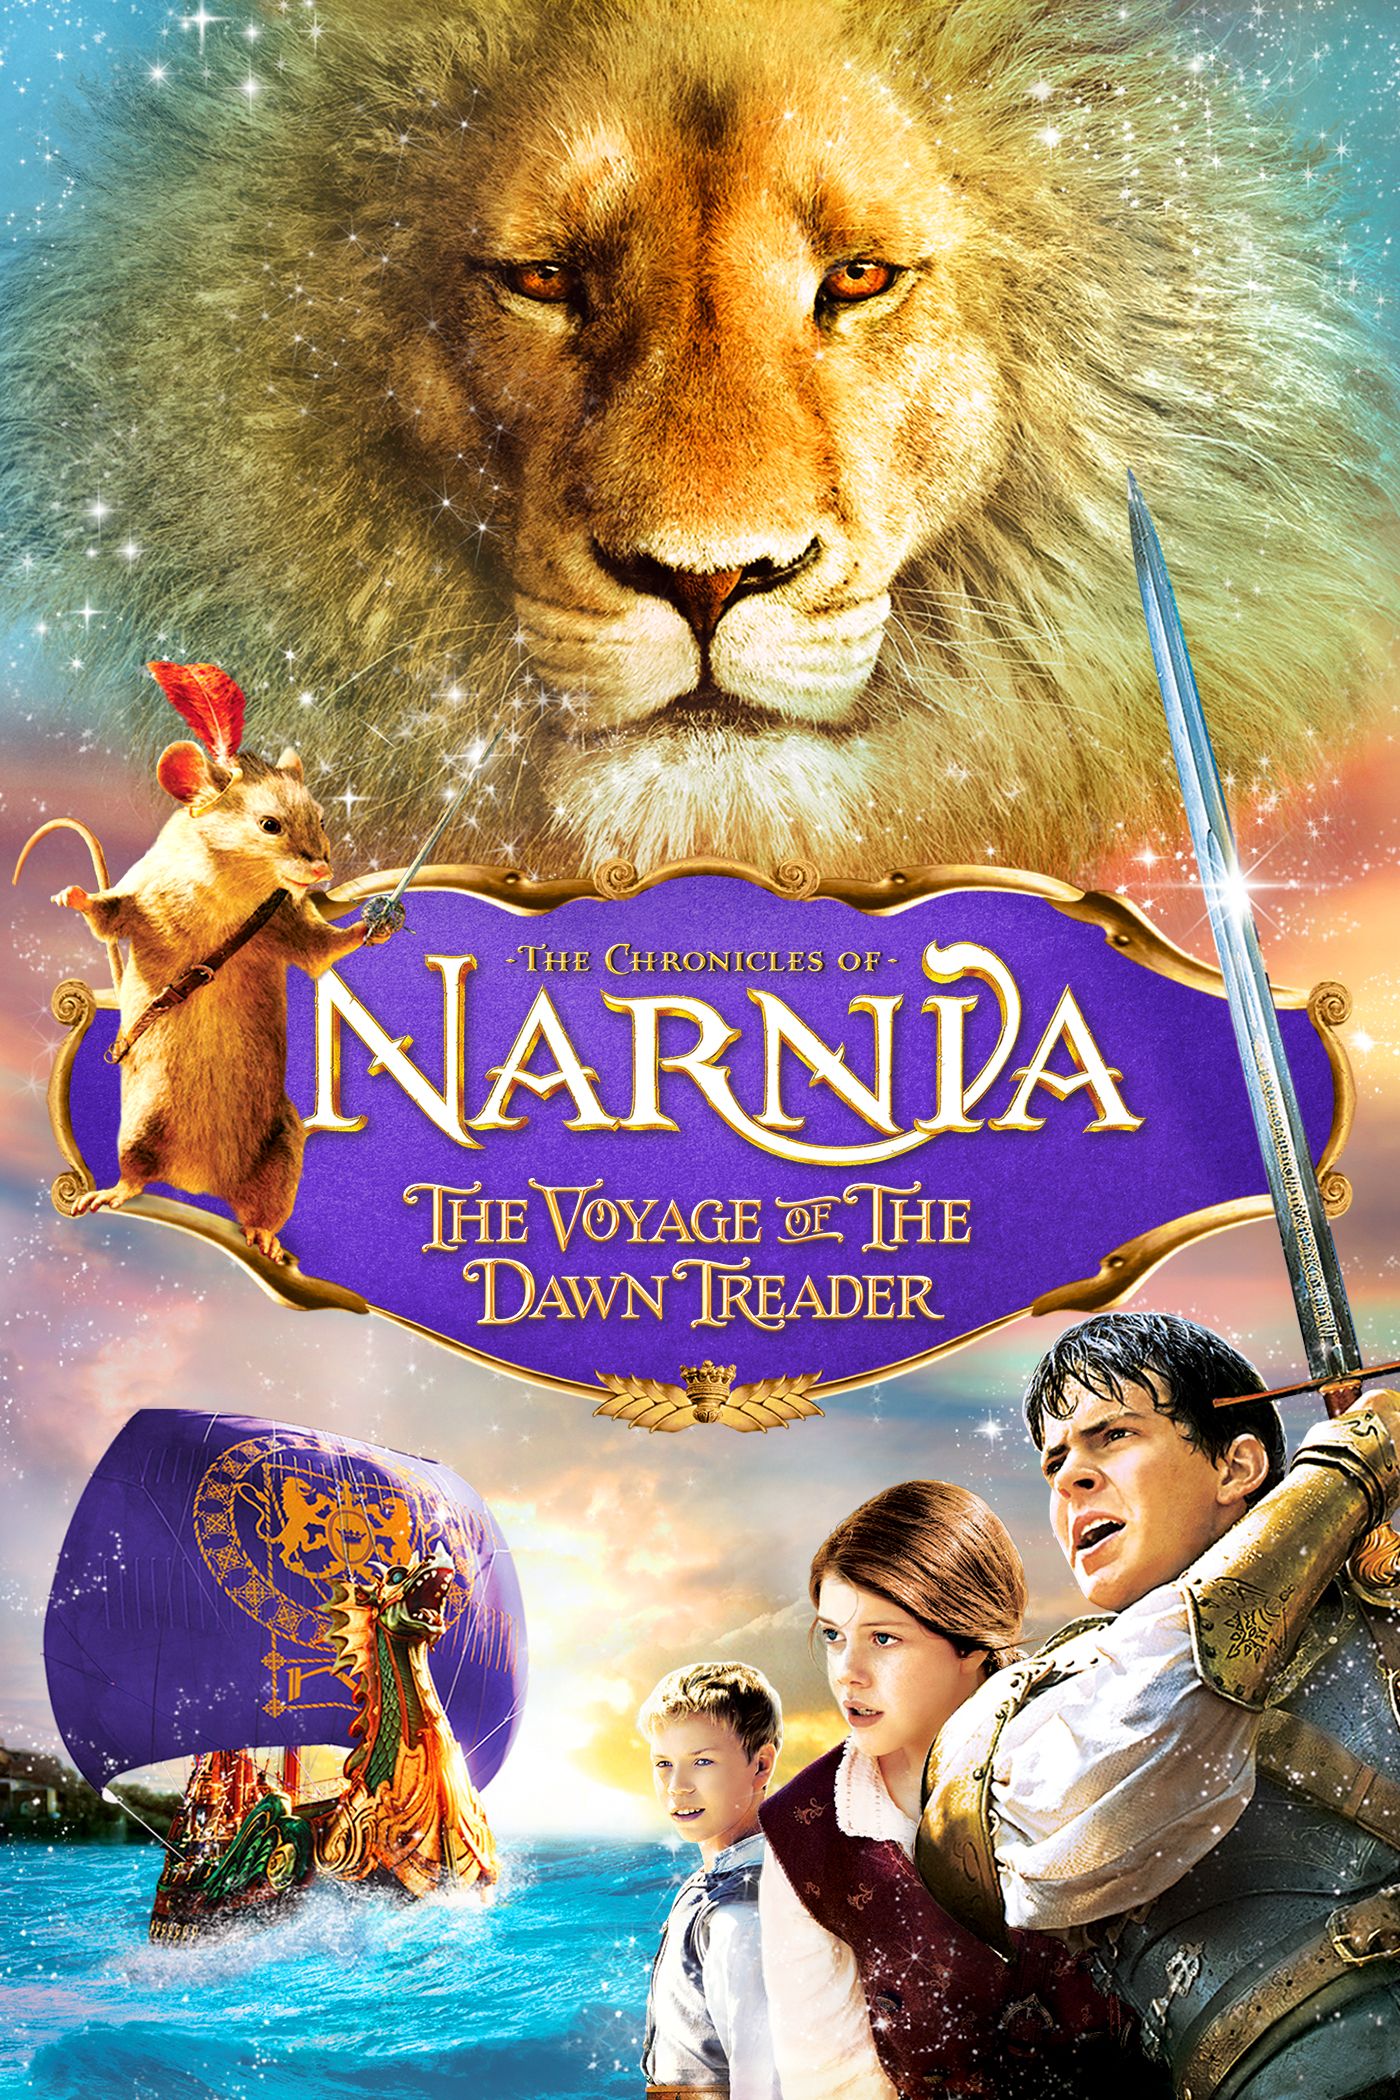 narnia 2 full movie online free